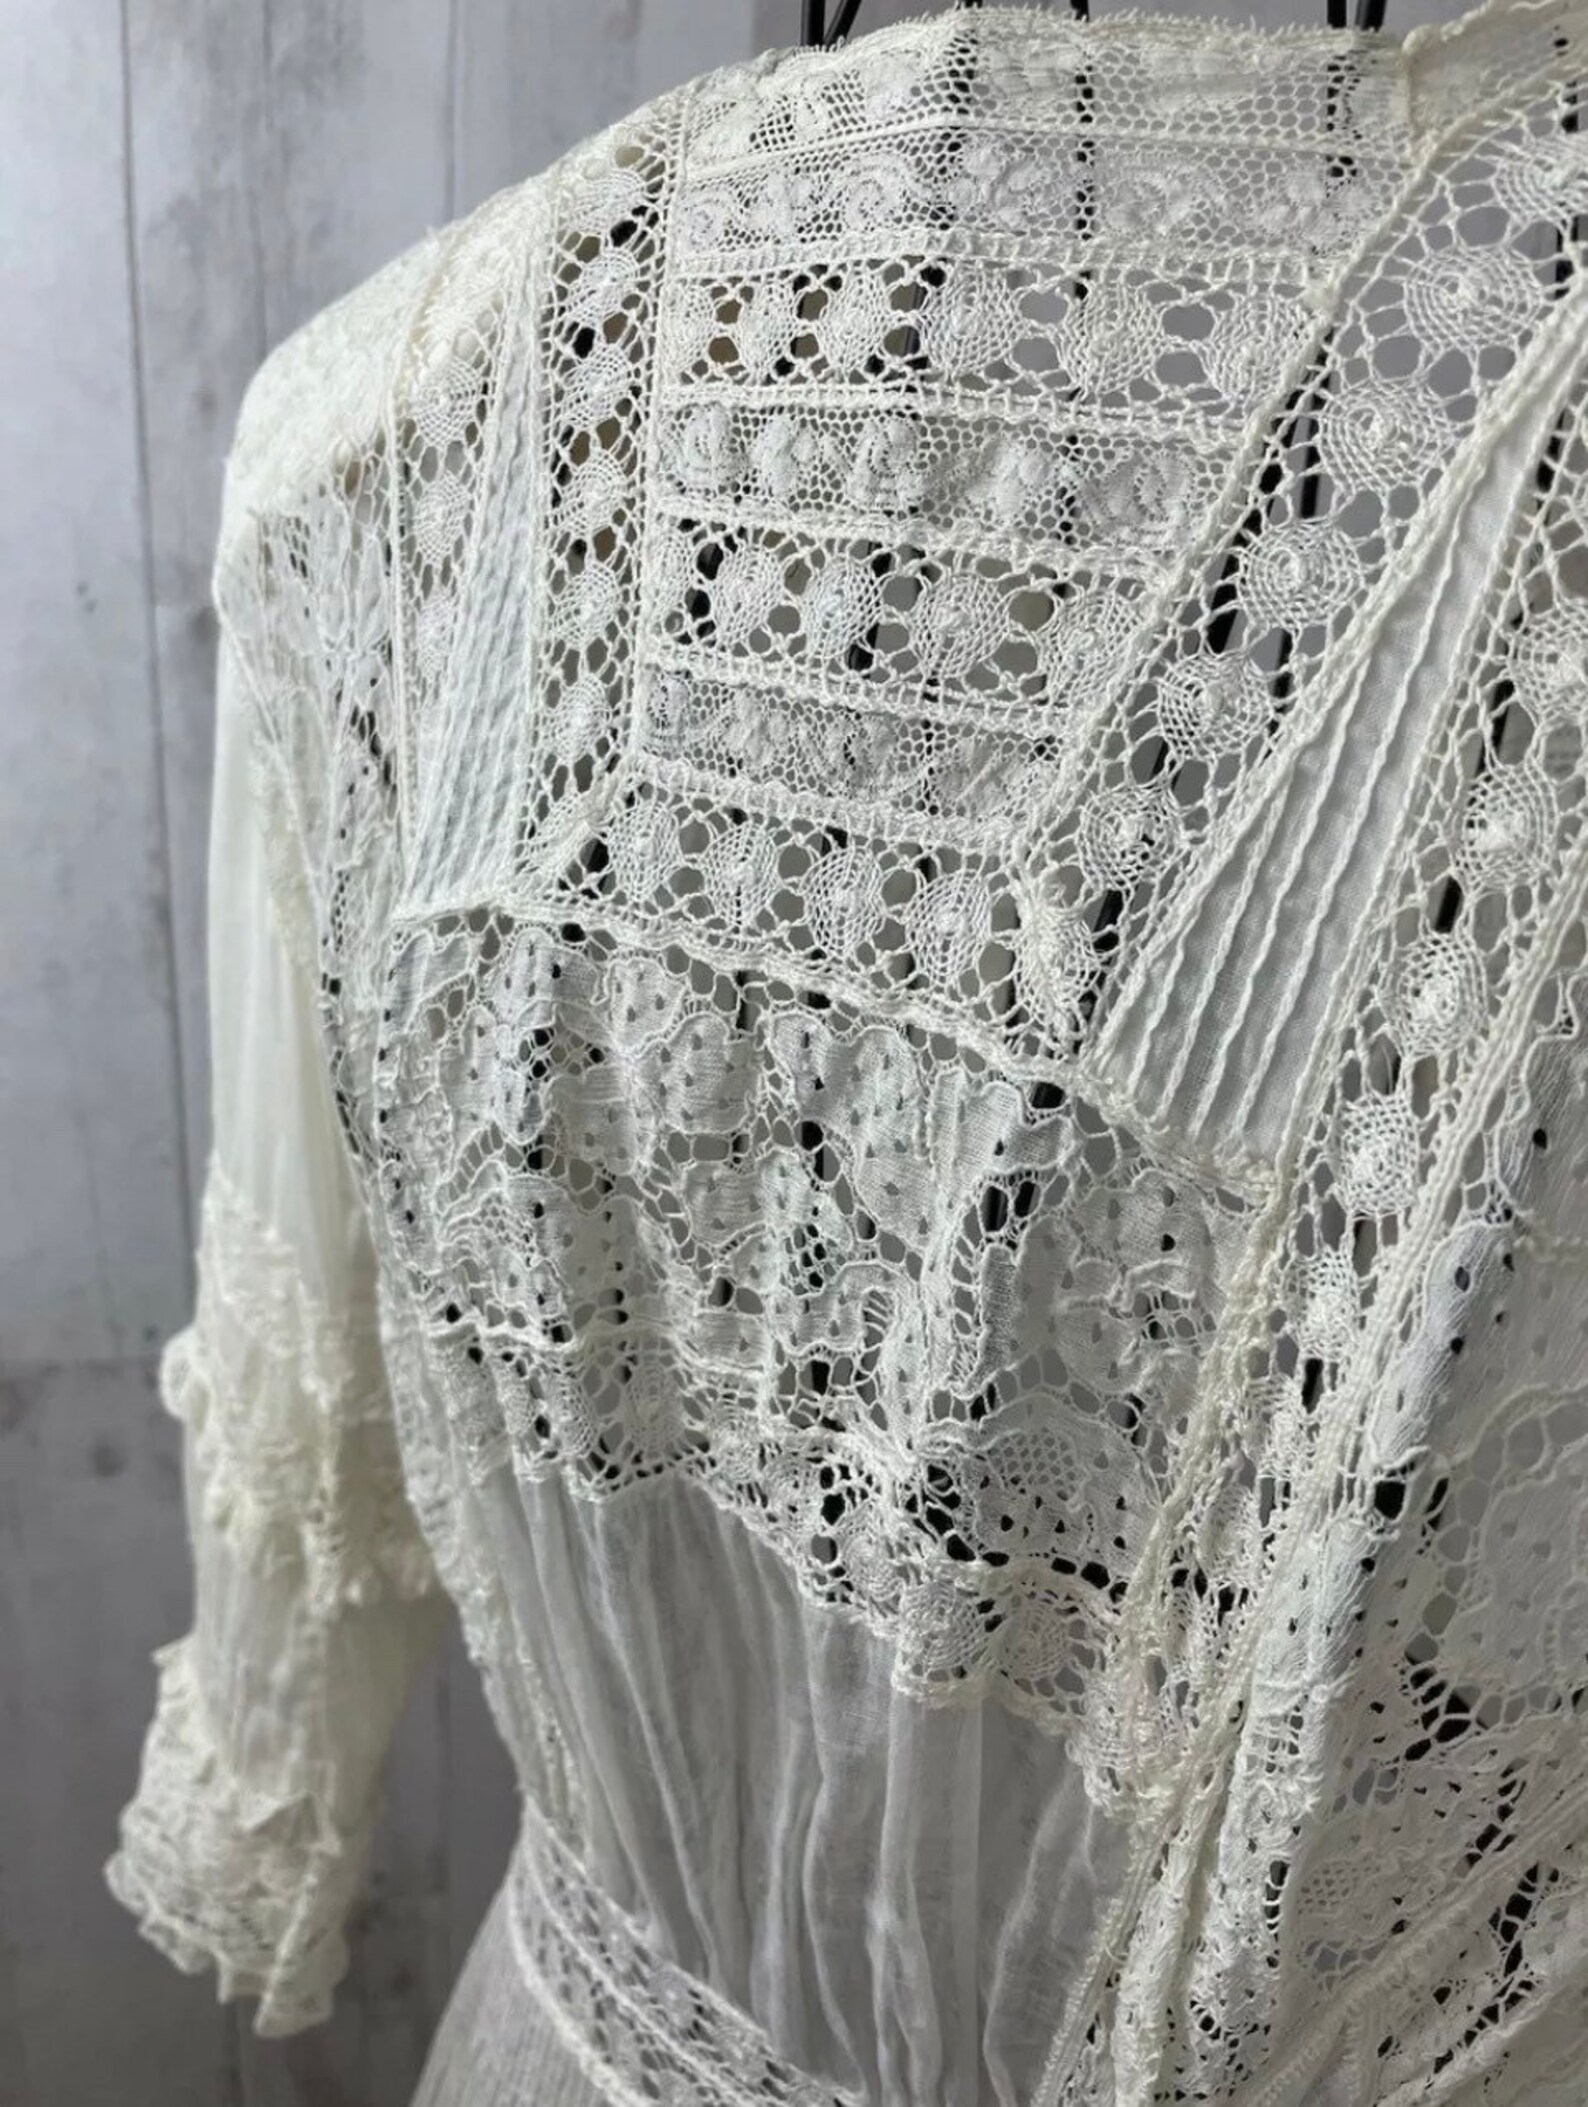 1910s Edwardian DressSheer White Batiste Cotton Lawn Dress | Etsy